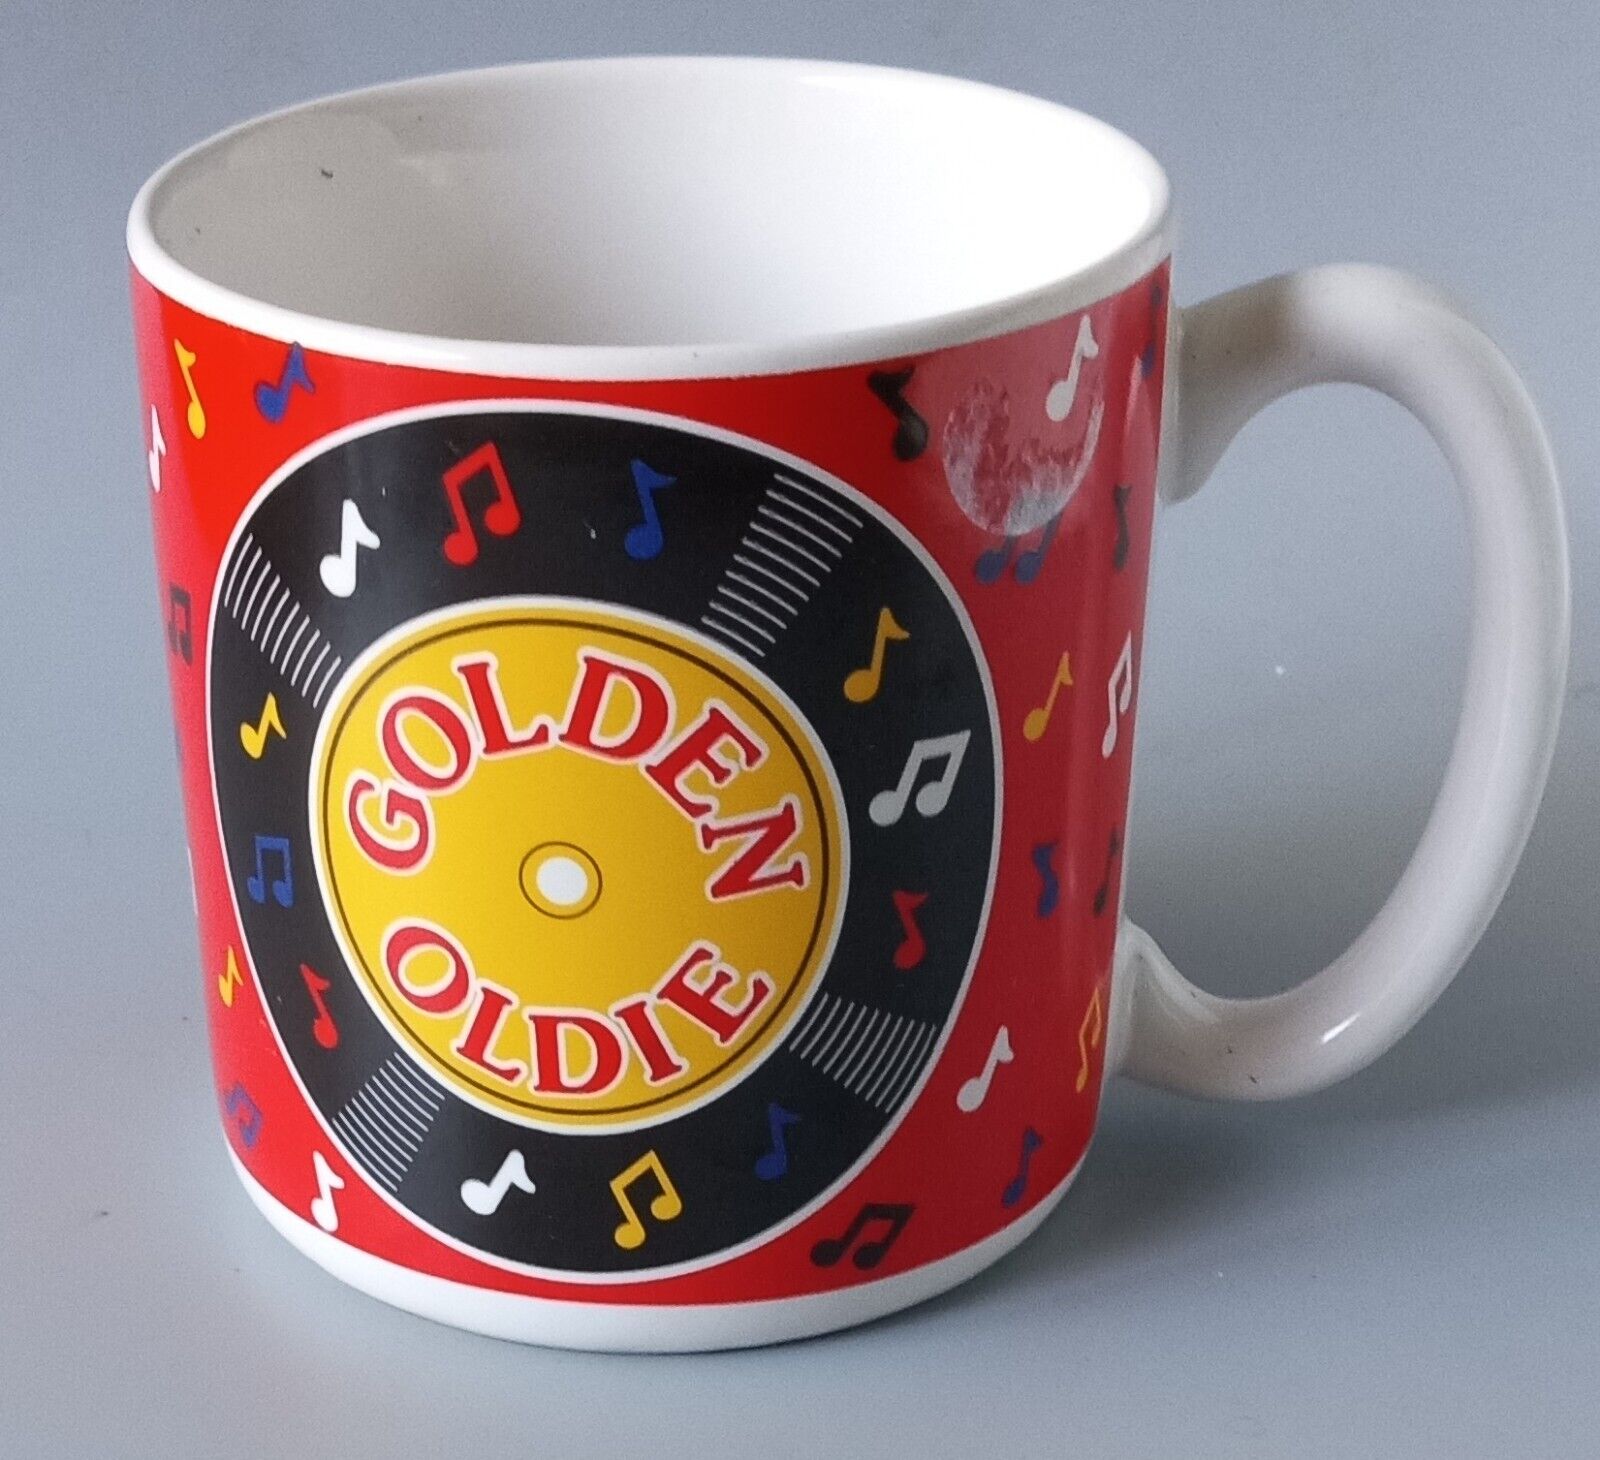 1993 Golden Oldie Record Coffee Mug. 10oz.